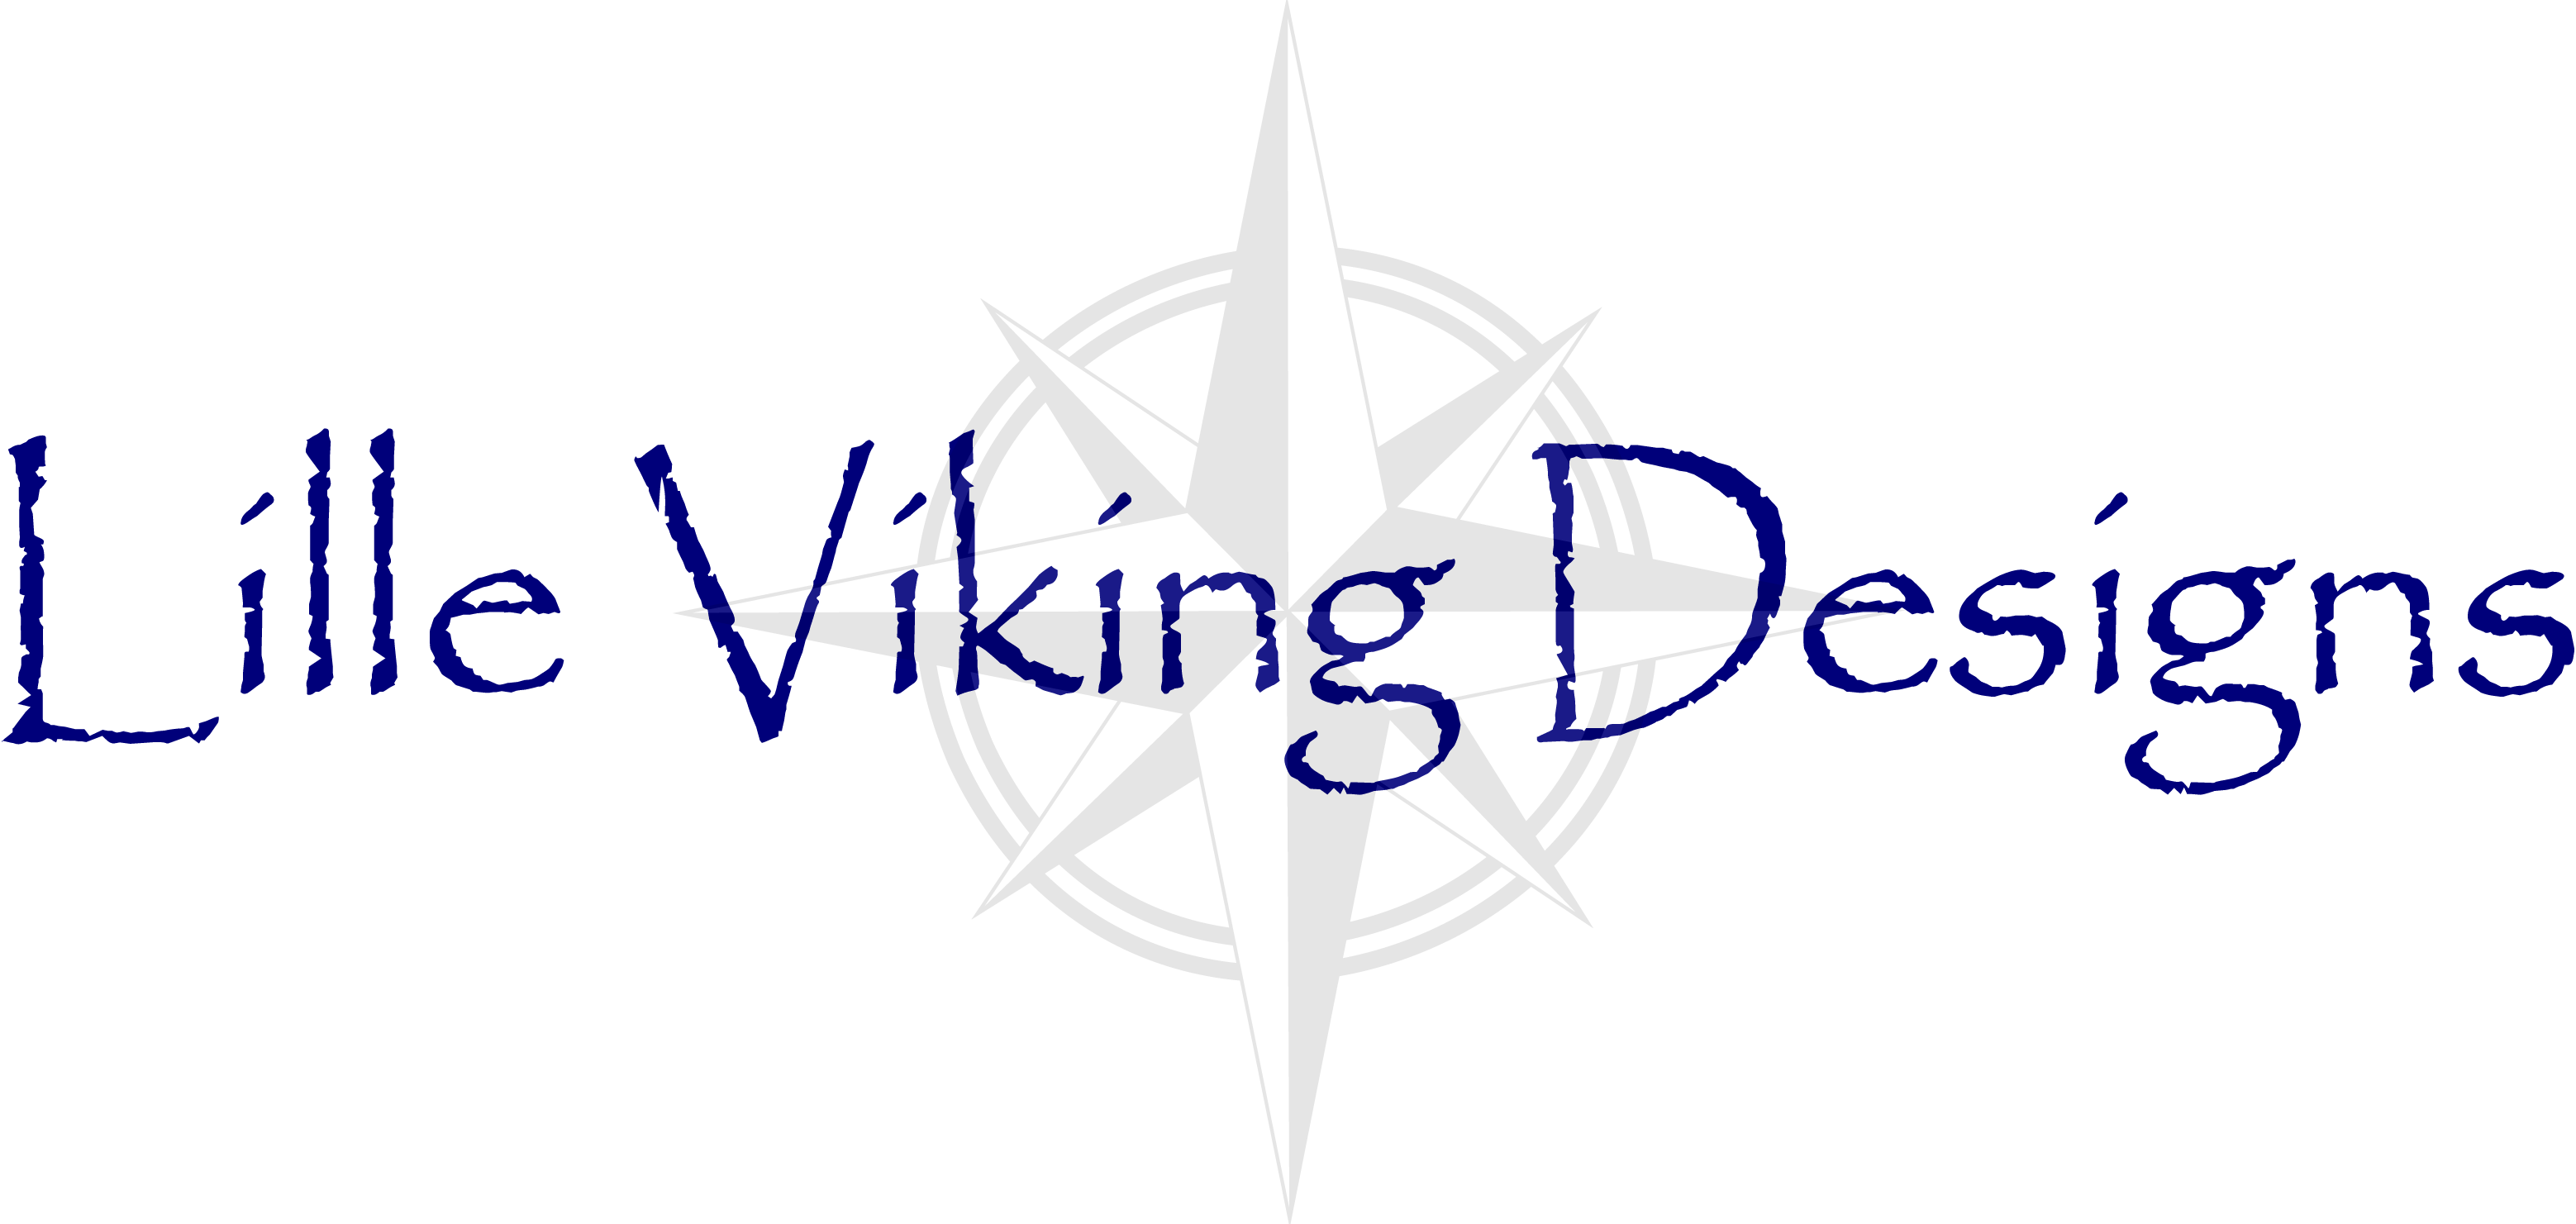 Lille Viking Designs logo